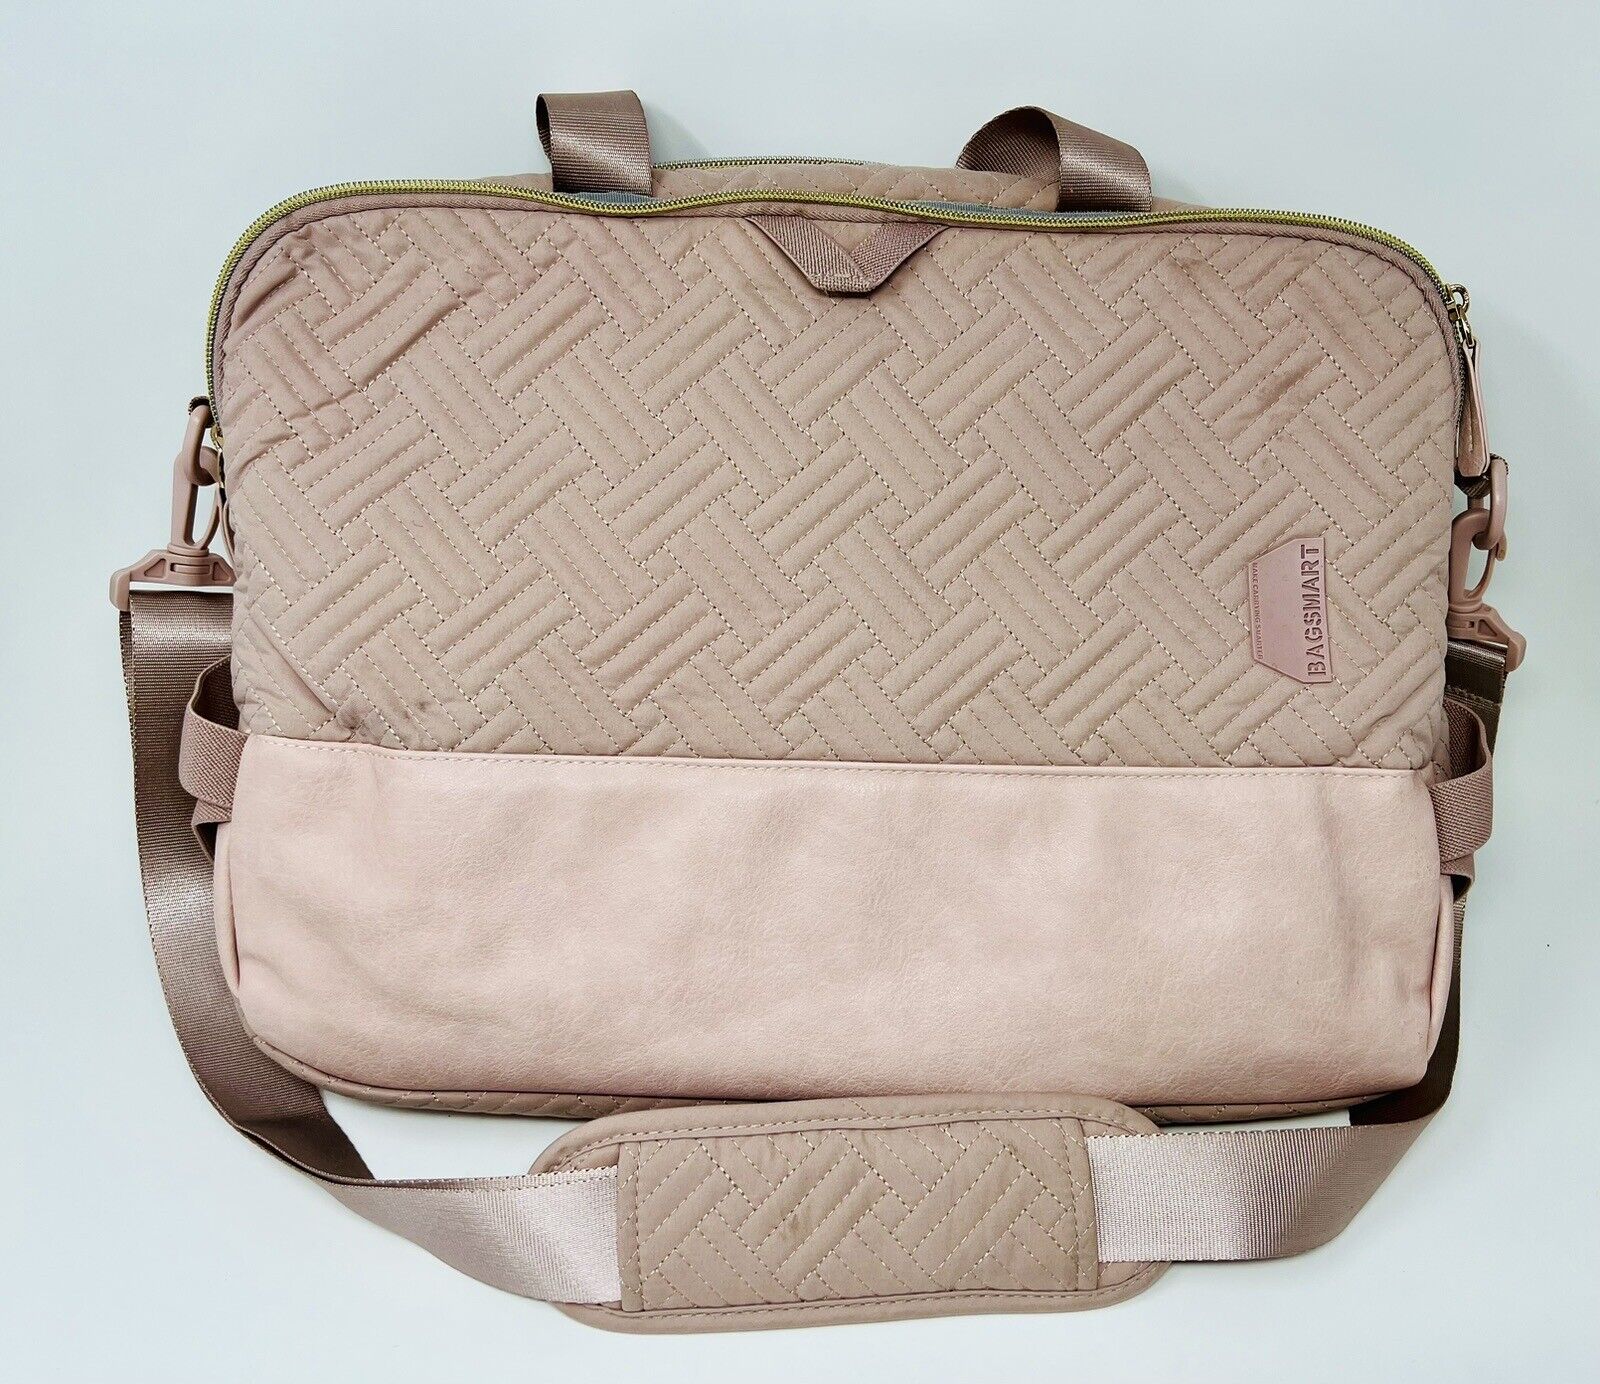 Laptop Tablet Bag by Bagsmart 15.6 Inch Briefcase Travel Women Dusty Rose Color